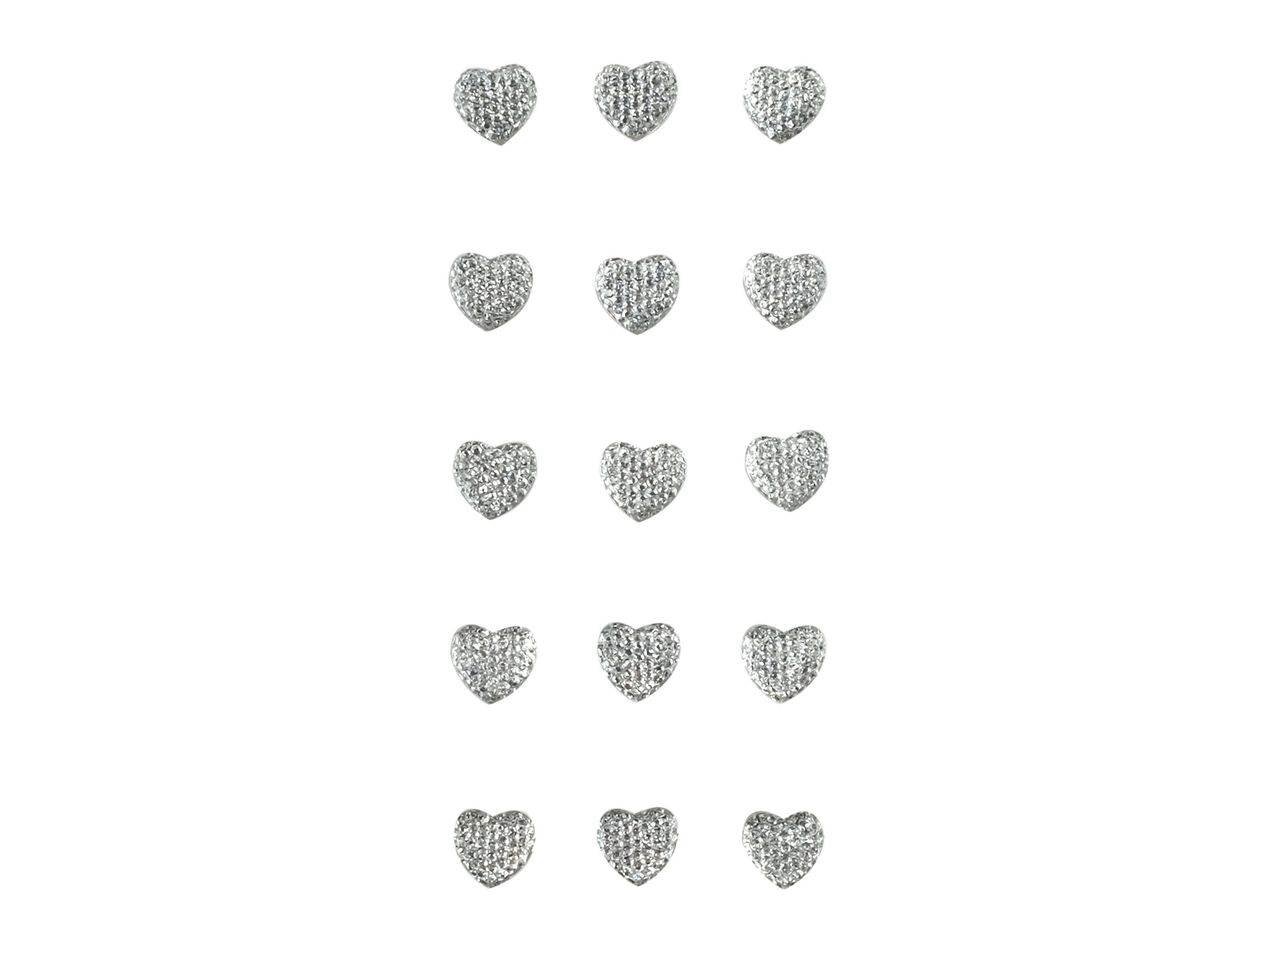 Handmade Sticker Hearts, clear crystall